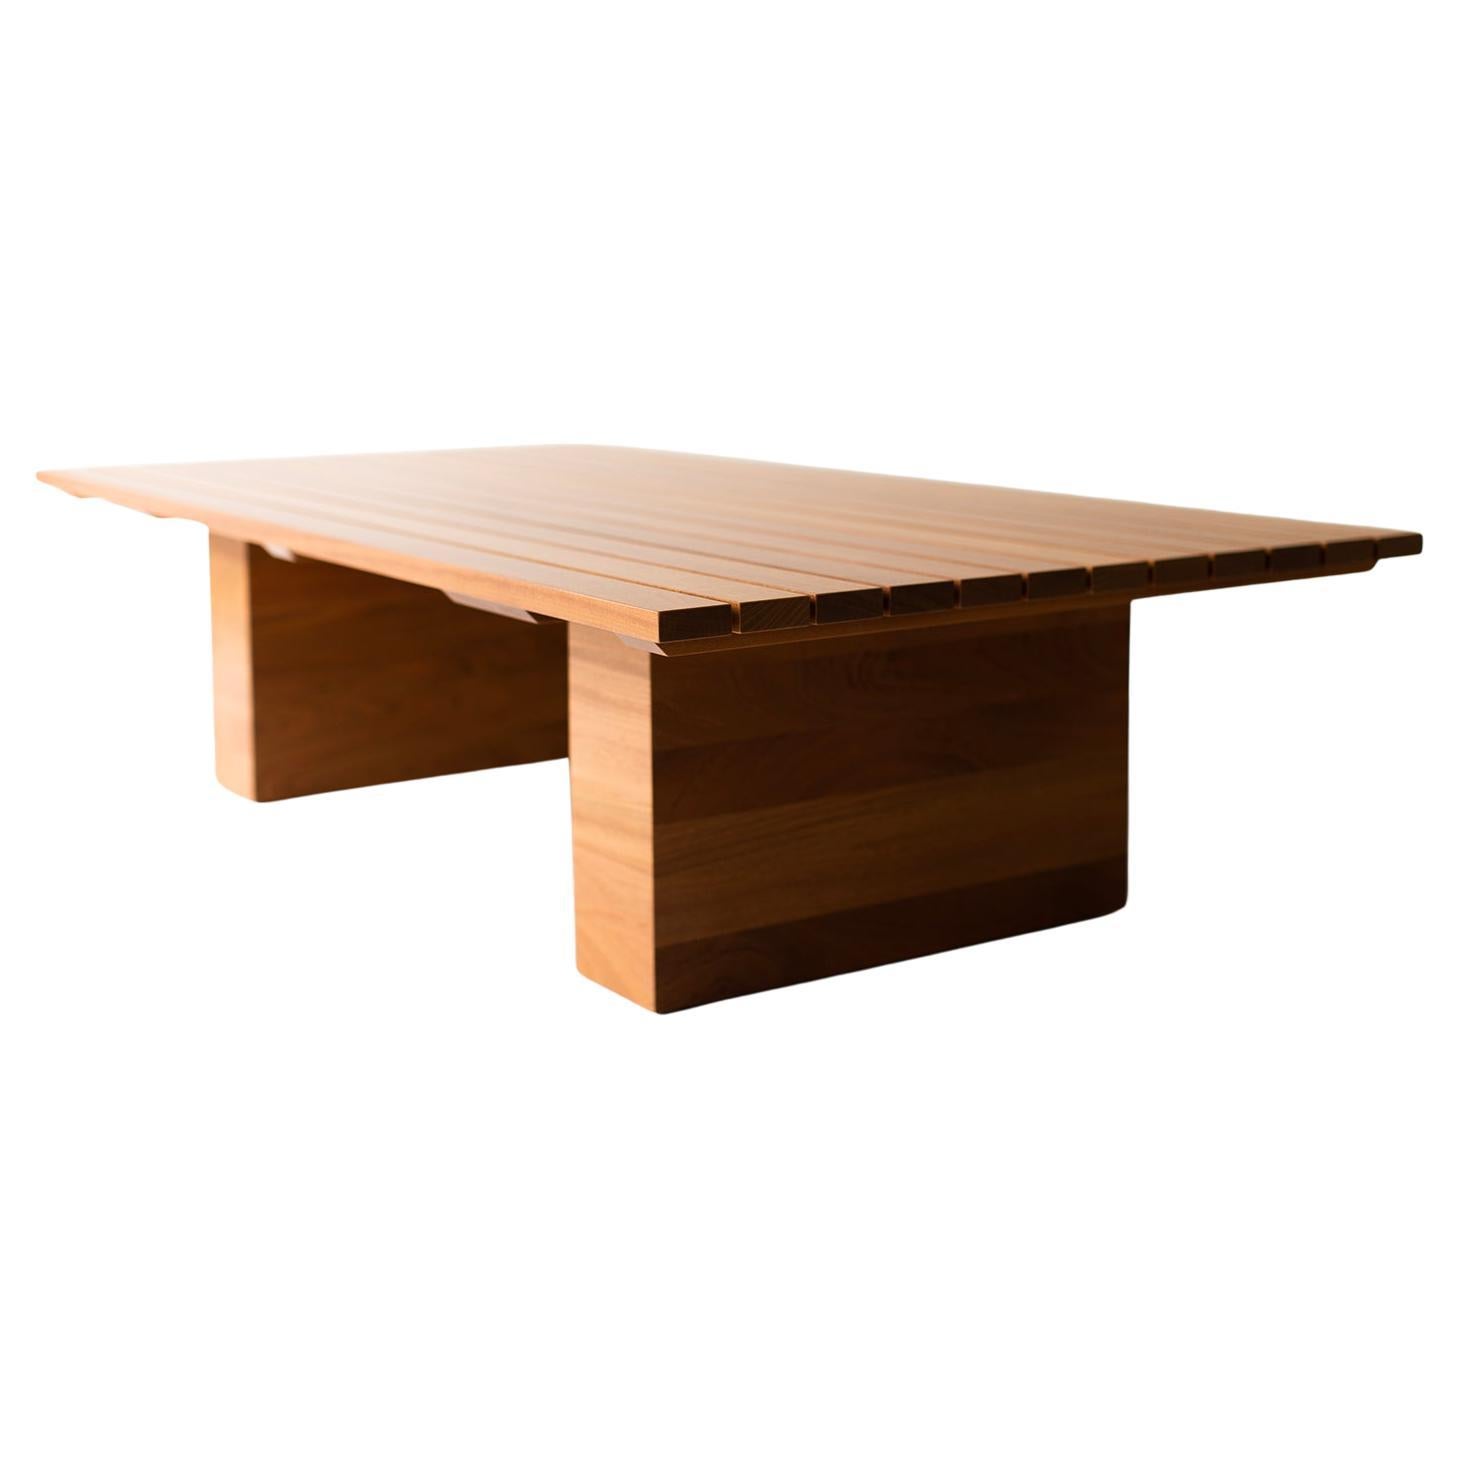 Bertu Coffee Table, Outdoor Wood Coffee Table, Coffee Table, Suelo For Sale